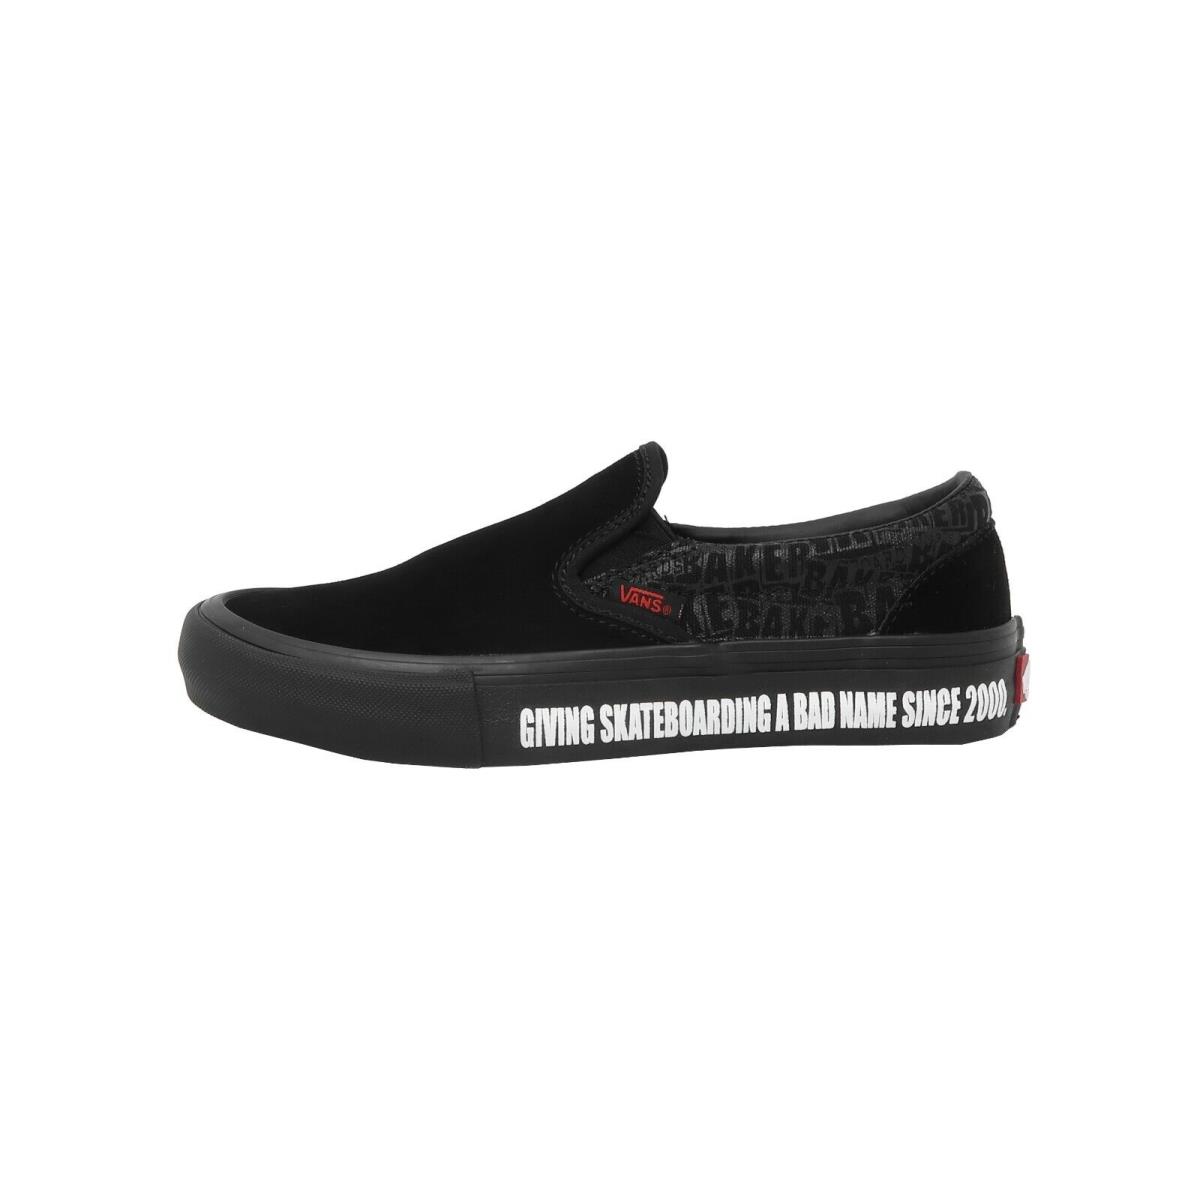 Vans Slip On Pro Suede Black Red Men Women Shoes Sneakers